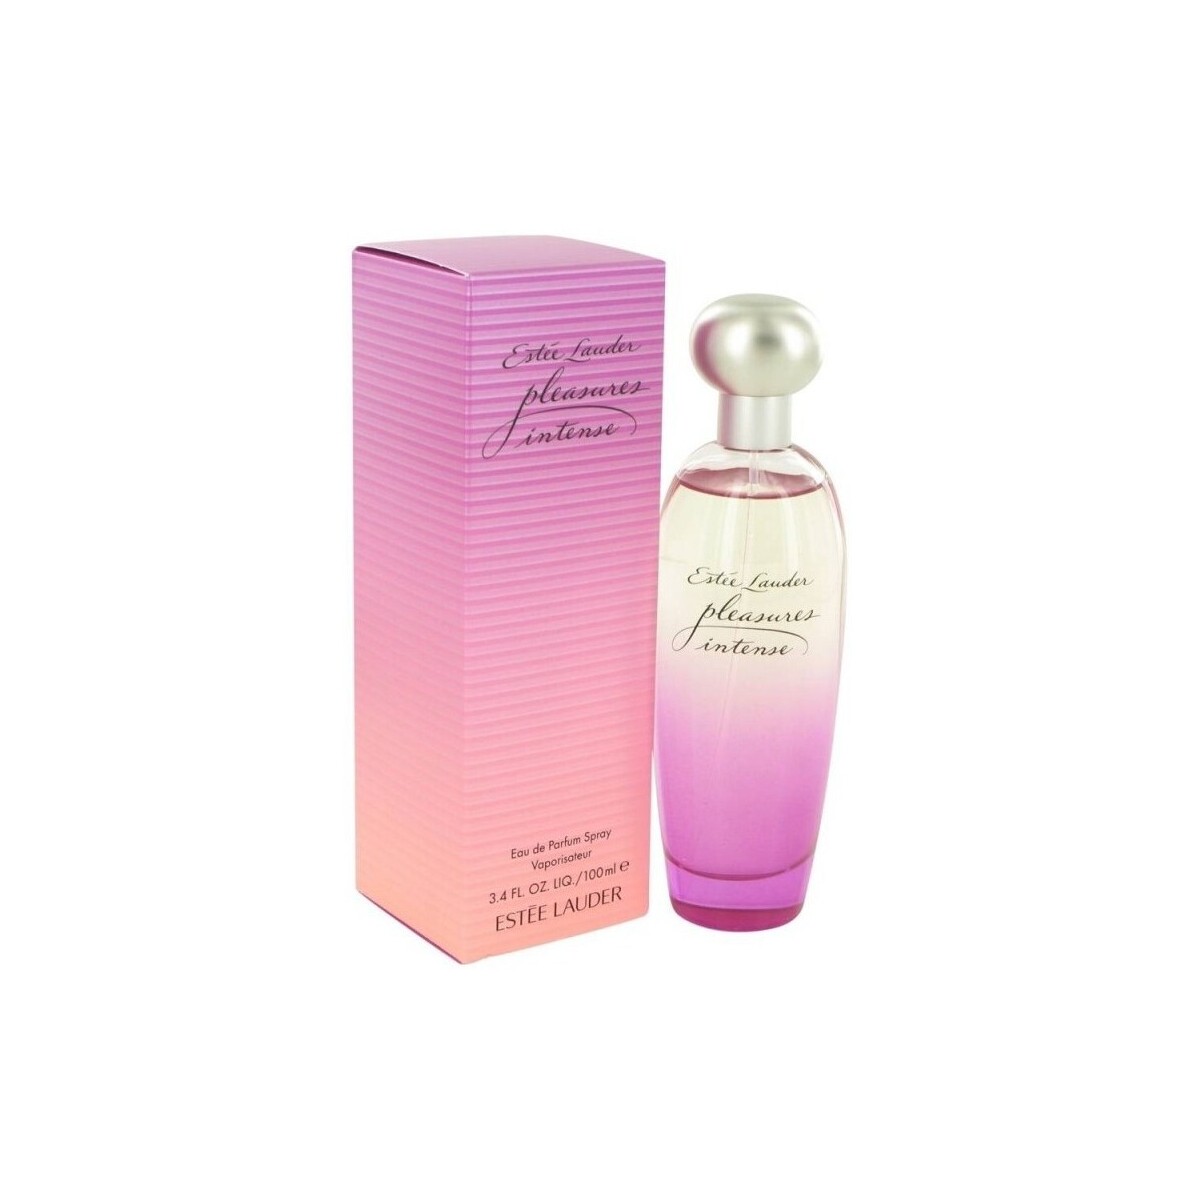 Belleza Mujer Perfume Estee Lauder Pleasures Intense - Eau de Parfum - 100ml - Vaporizador Pleasures Intense - perfume - 100ml - spray